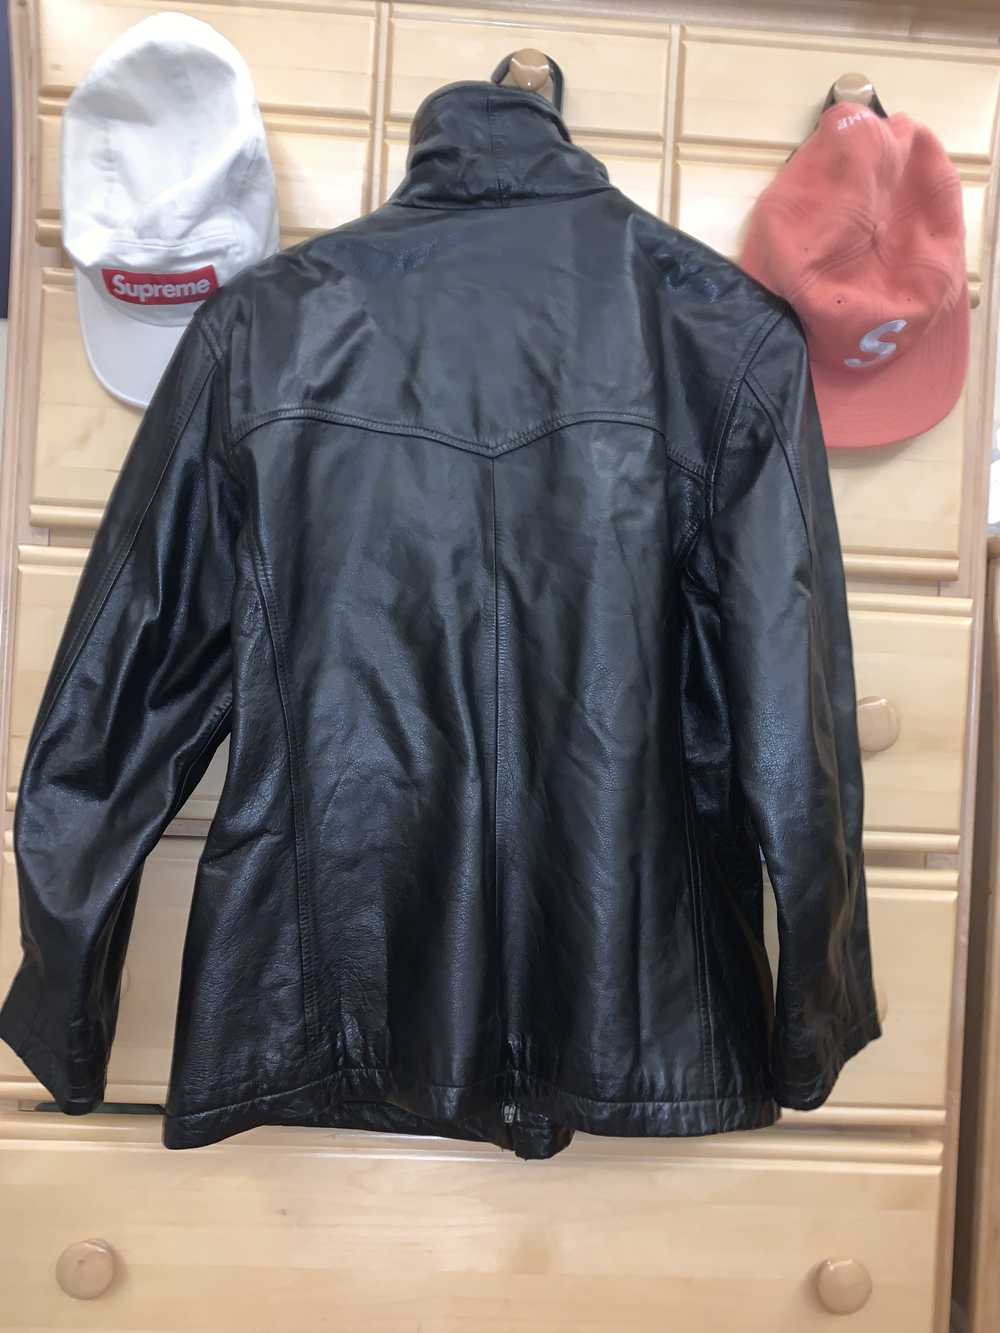 Wilsons Leather - Leather Jacket - image 3